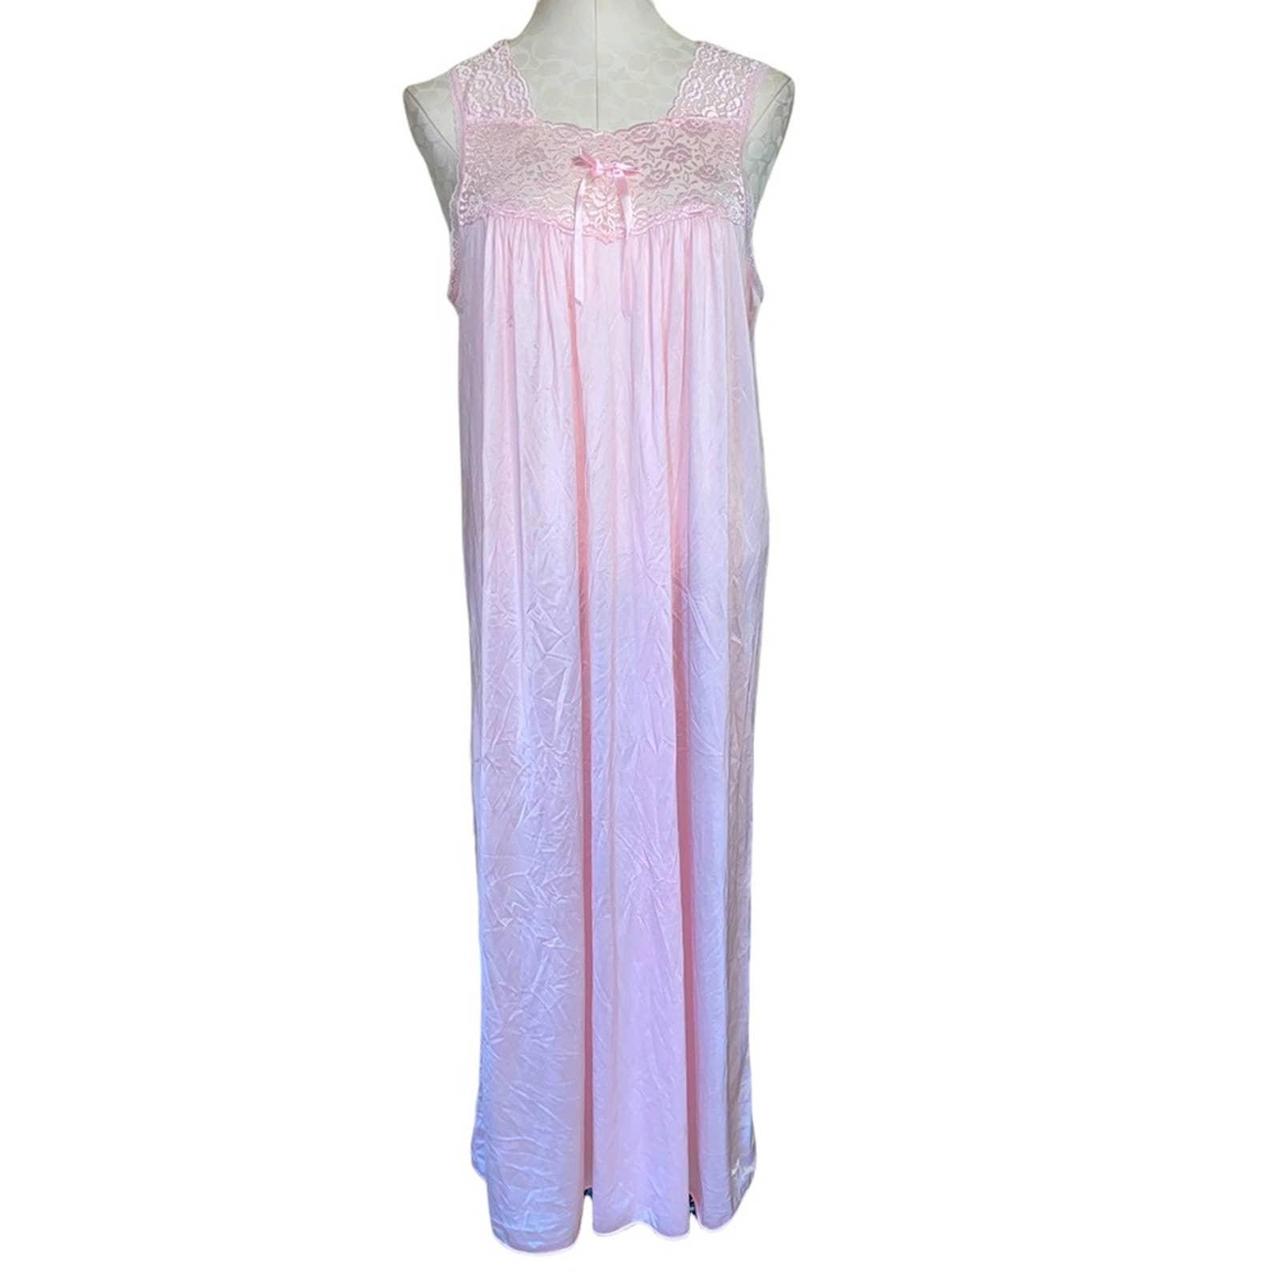 Product Image 2 - Vanity Fair vintage nightgown sleeveless